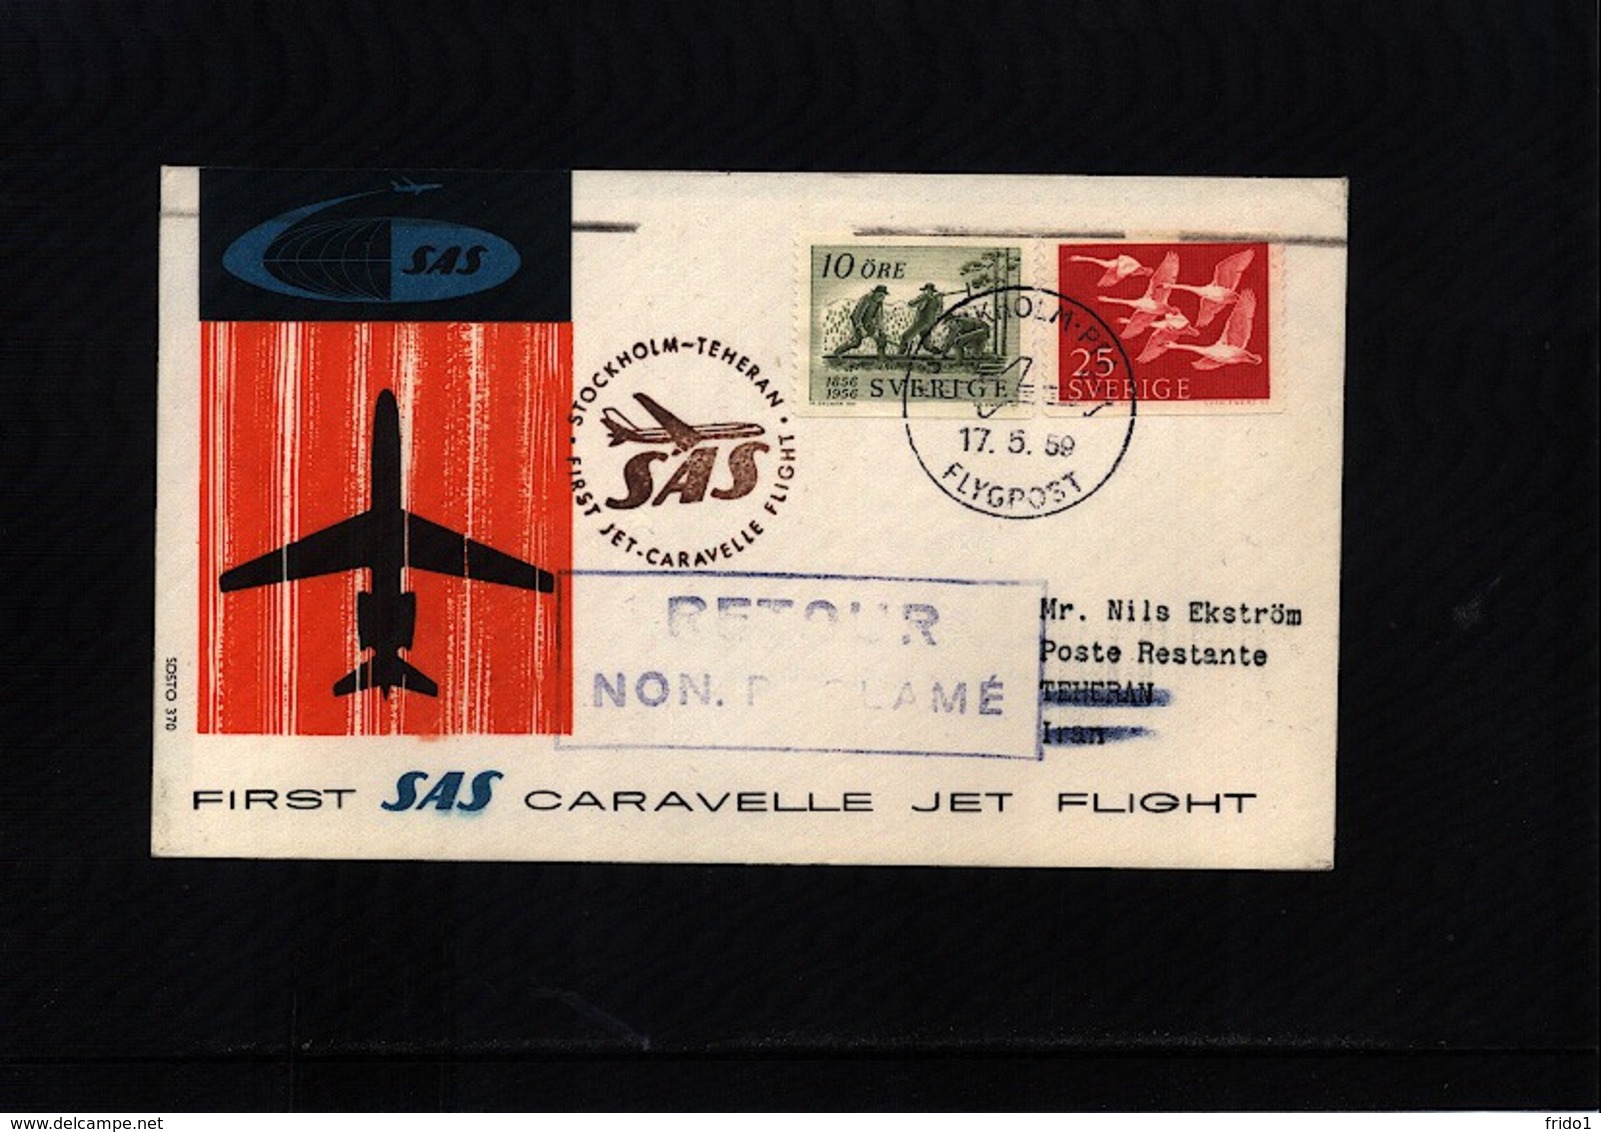 Sweden 1959 SAS First Flight Stockholm - Teheran - Covers & Documents